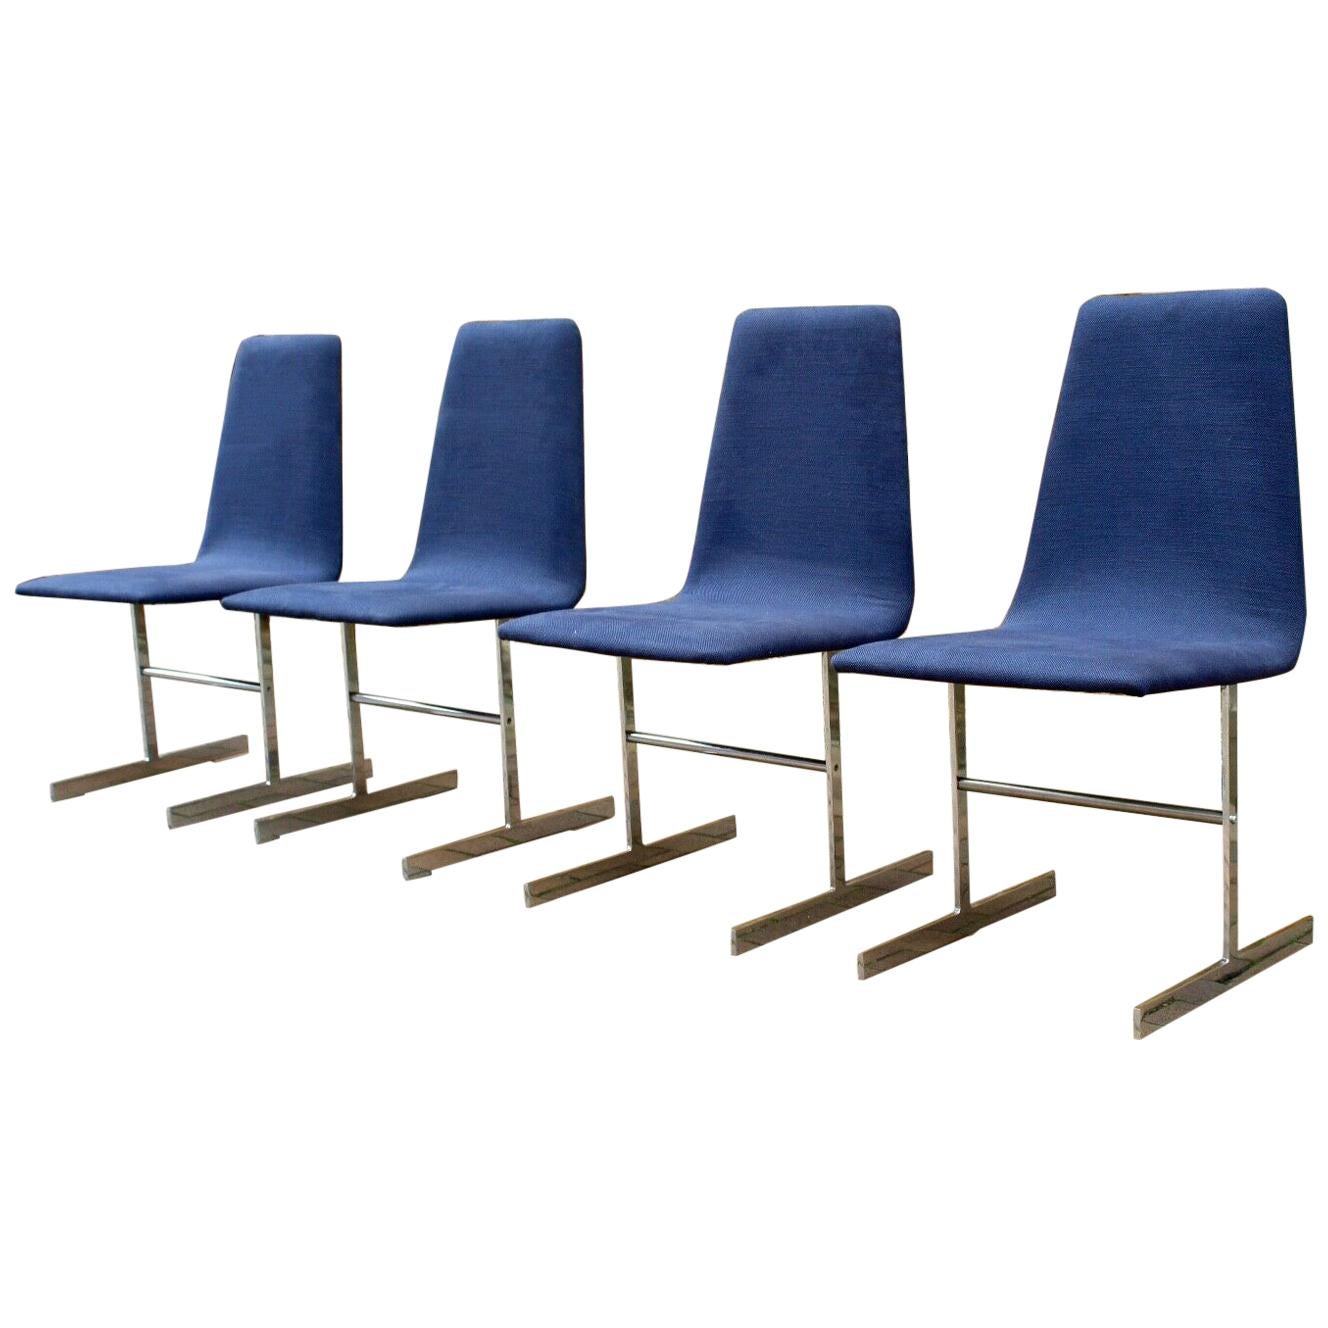 4 Vintage Midcentury Tim Bates Pieff Lisse Chrome Modernist Dining Chairs